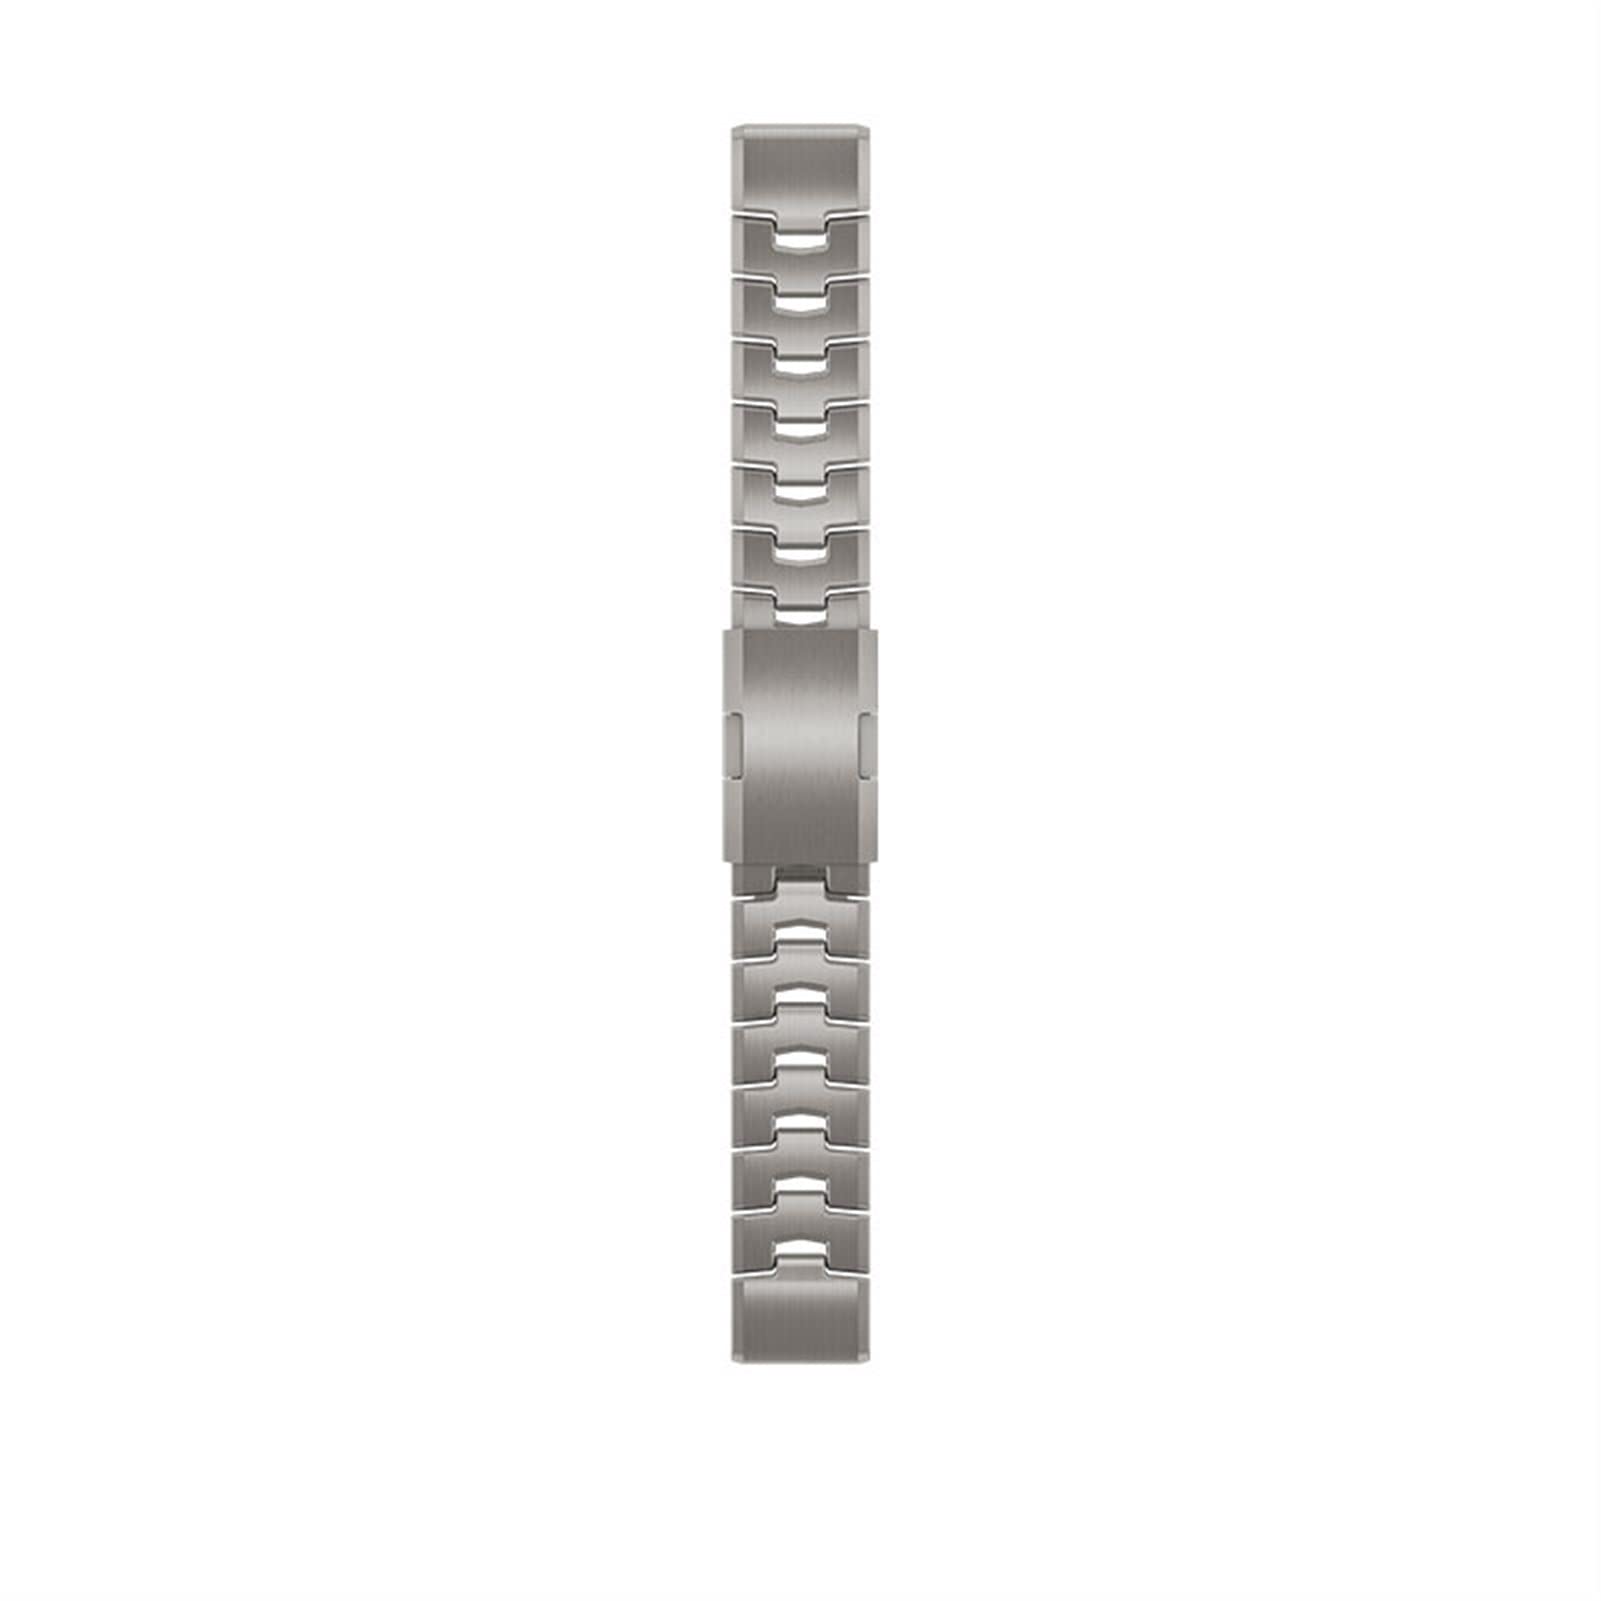 TRDYBSK Titanium Alloy Watchband QuickFit Wrist Straps for Garmin Fenix 7X 7 6 5 5X Plus/6 6X Pro 3 3HR/Forerunner 935 945 Watch 22 26mm Strap (Color : Black, Size : 22mm Fenix 5 5Plus)